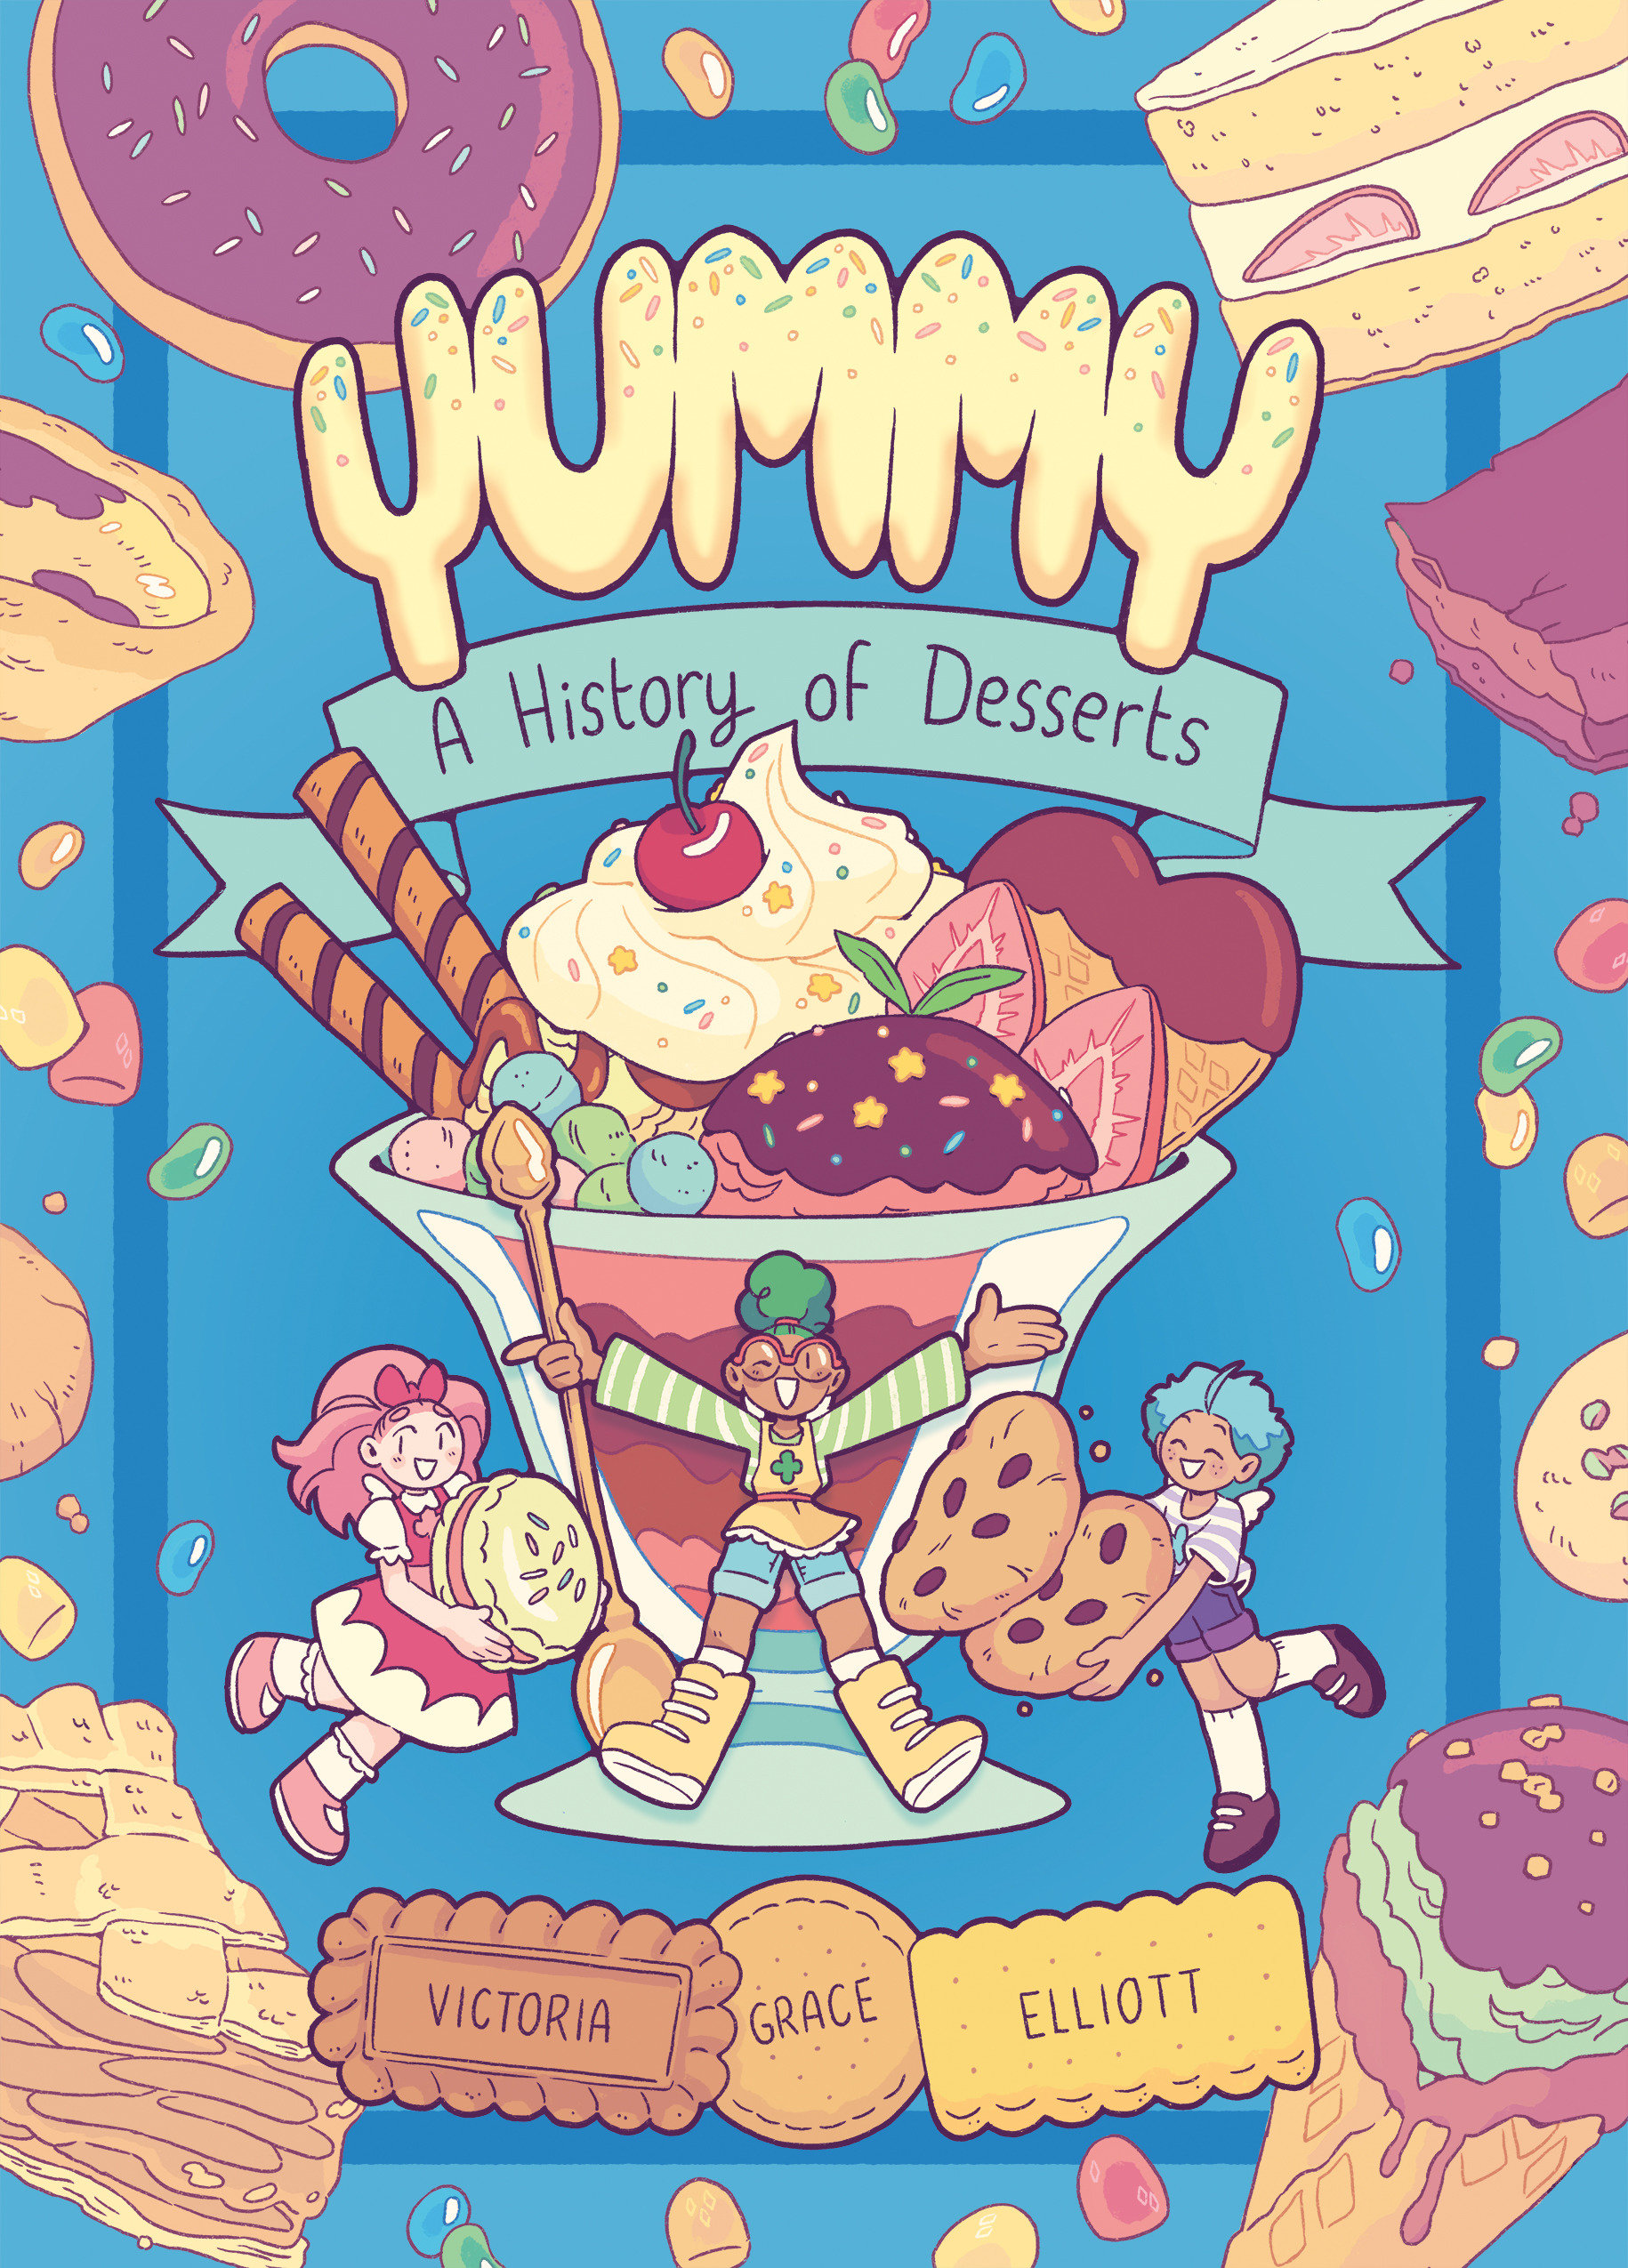 Yummy Hardcover Graphic Novel Volume 1 History of Desserts